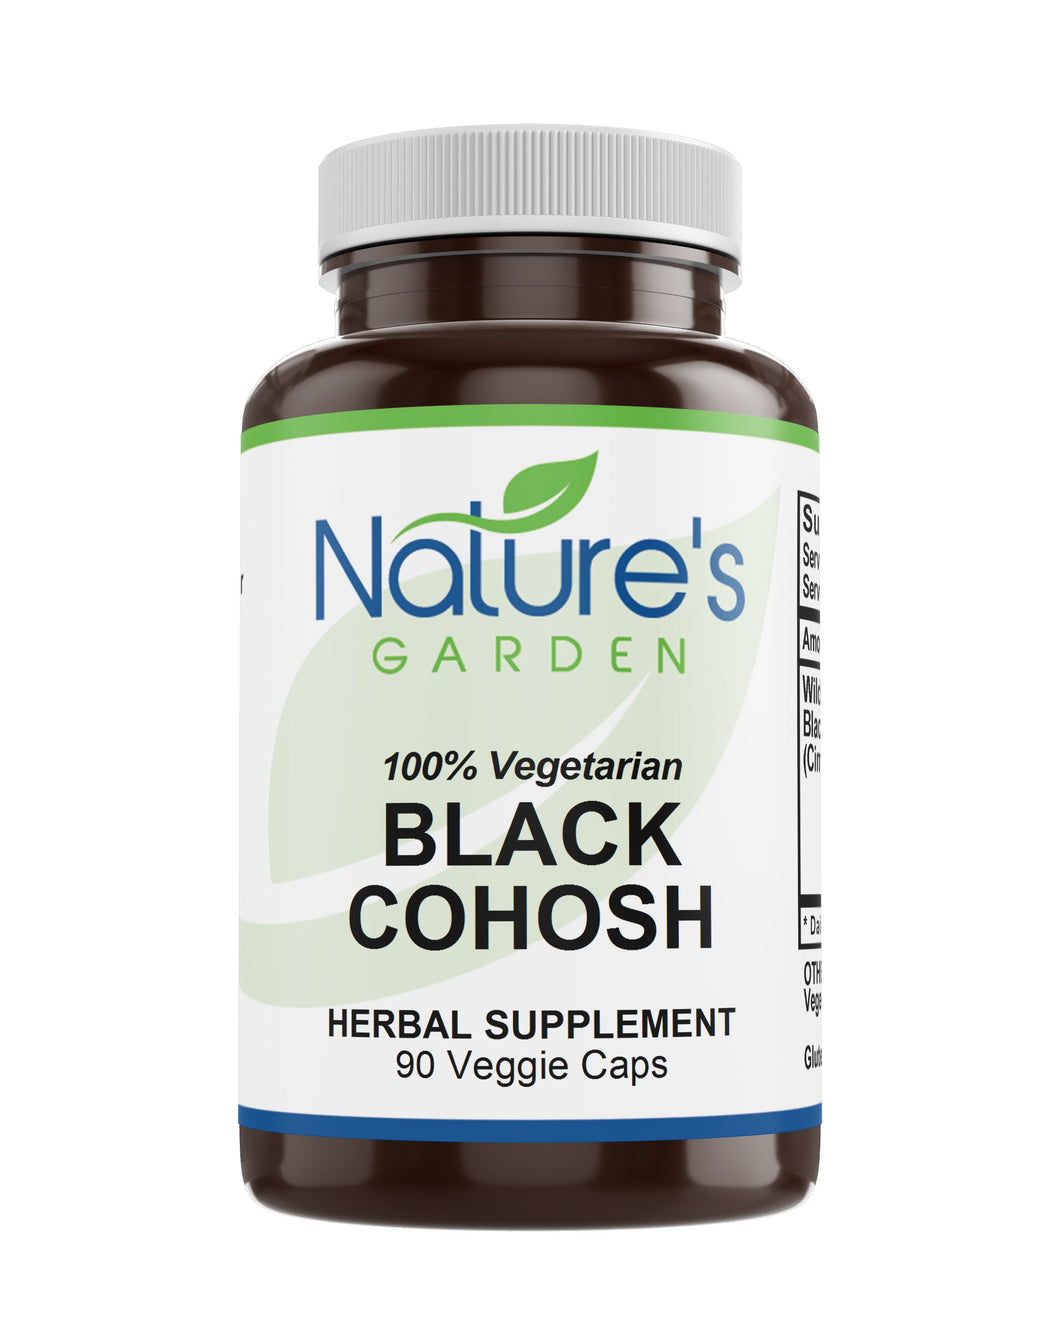 Black Cohosh - 90 Veggie Caps with 500mg Wild Black Cohosh Root